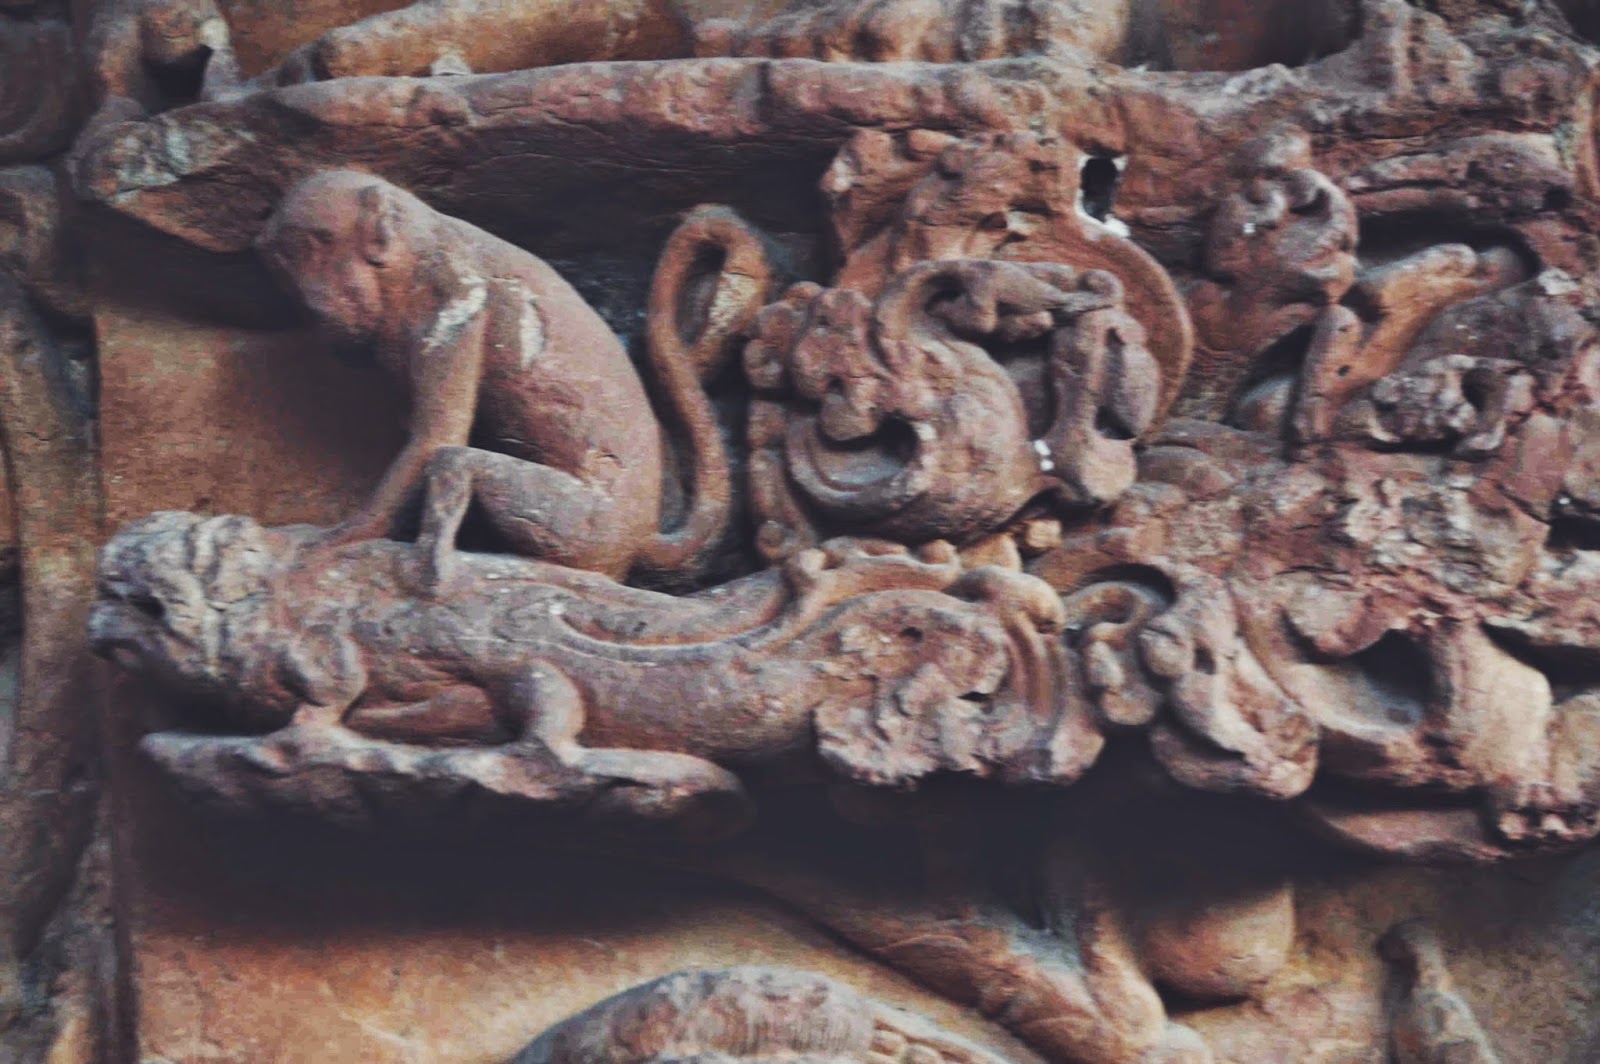 sirpur chhattisgarh budh vihar carvings panchtantra travel tourism 